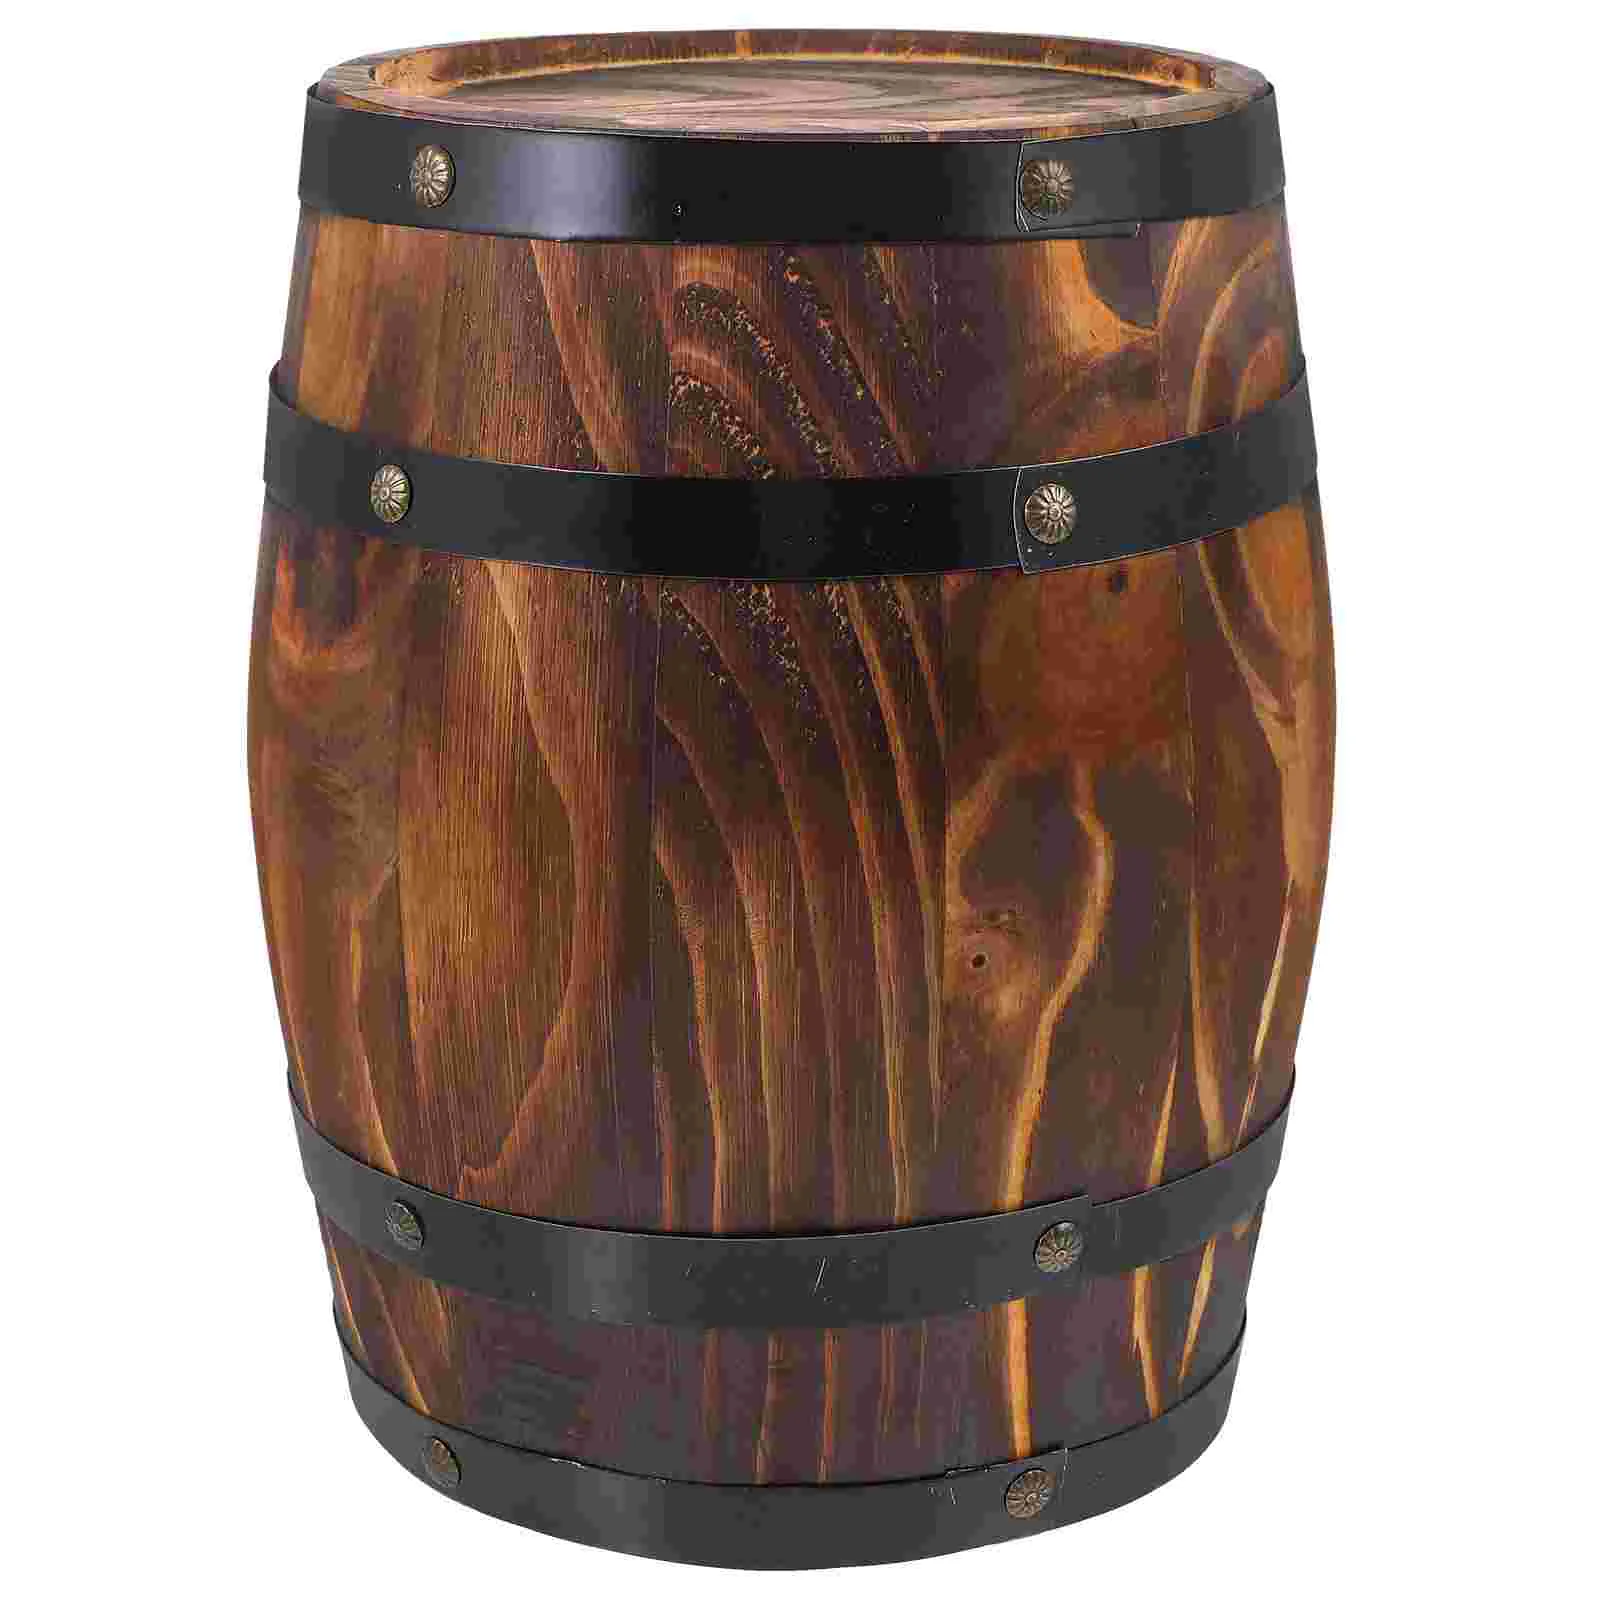 

Wood Wine Barrel Whiskey Barrel Bucket Vintage Flower Planter Container Water Wishing Well Pail Home Kitchen Bar Summer